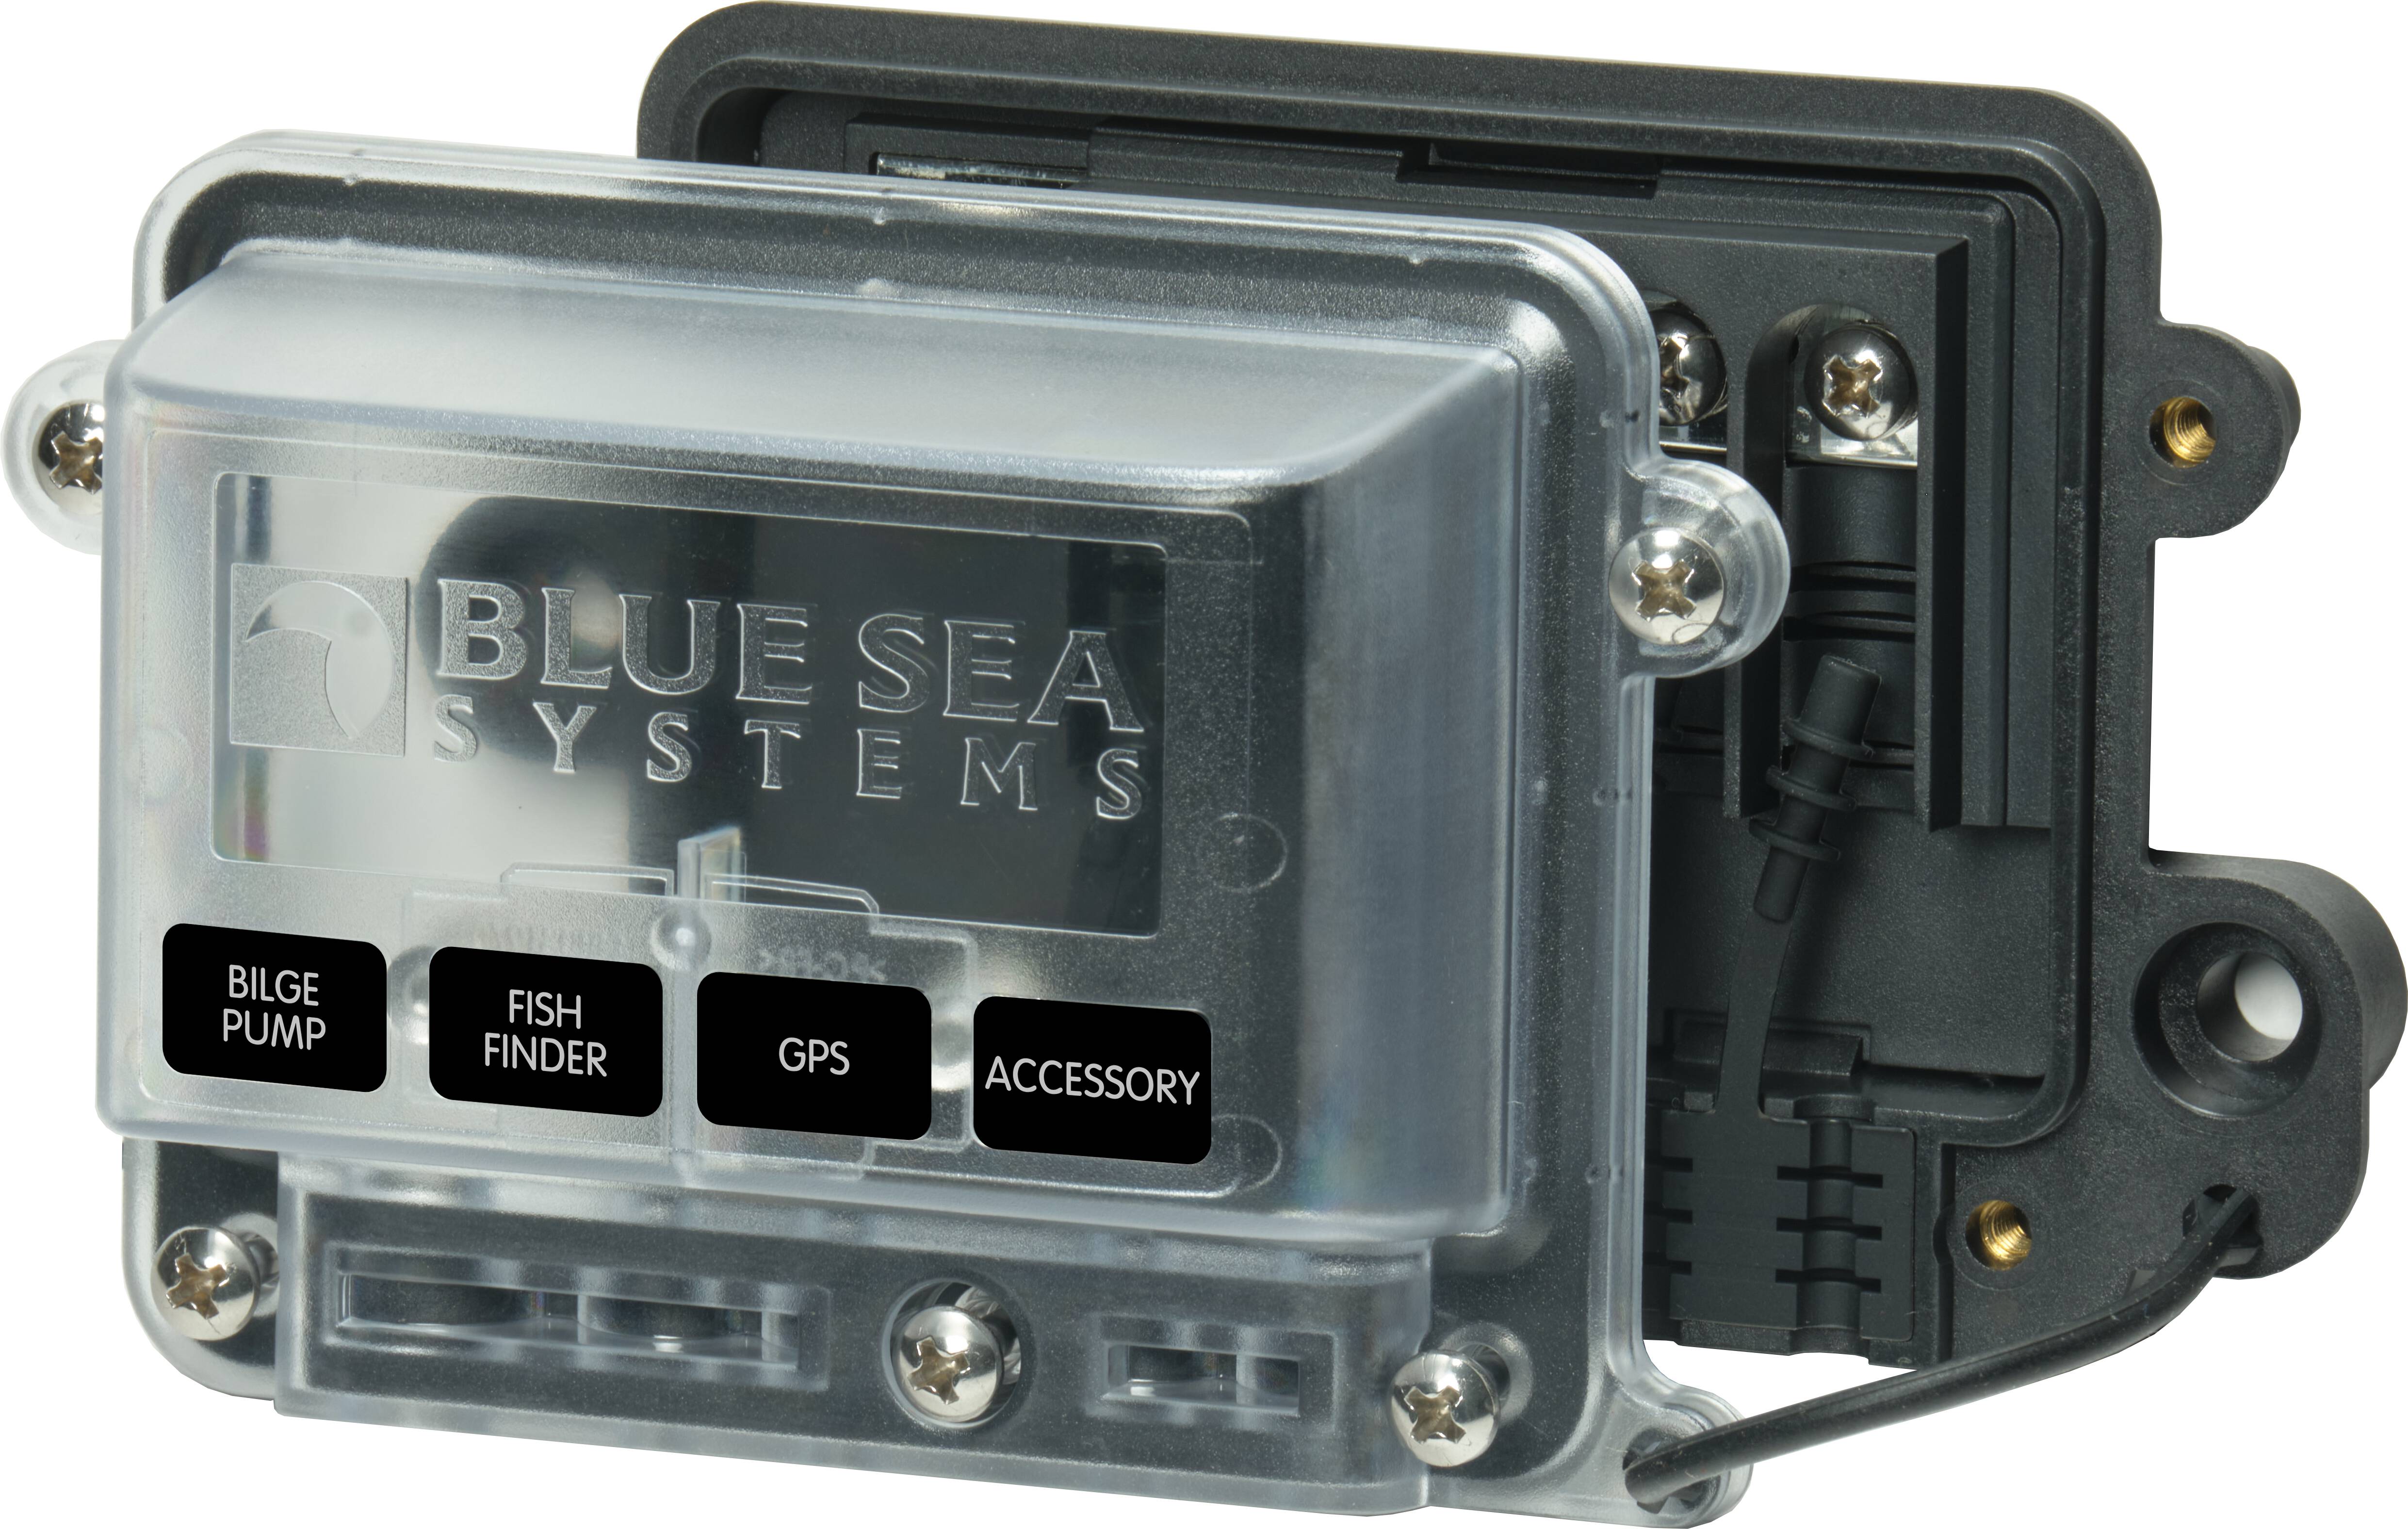 Part # 2356  Manufacturer Blue Sea Systems